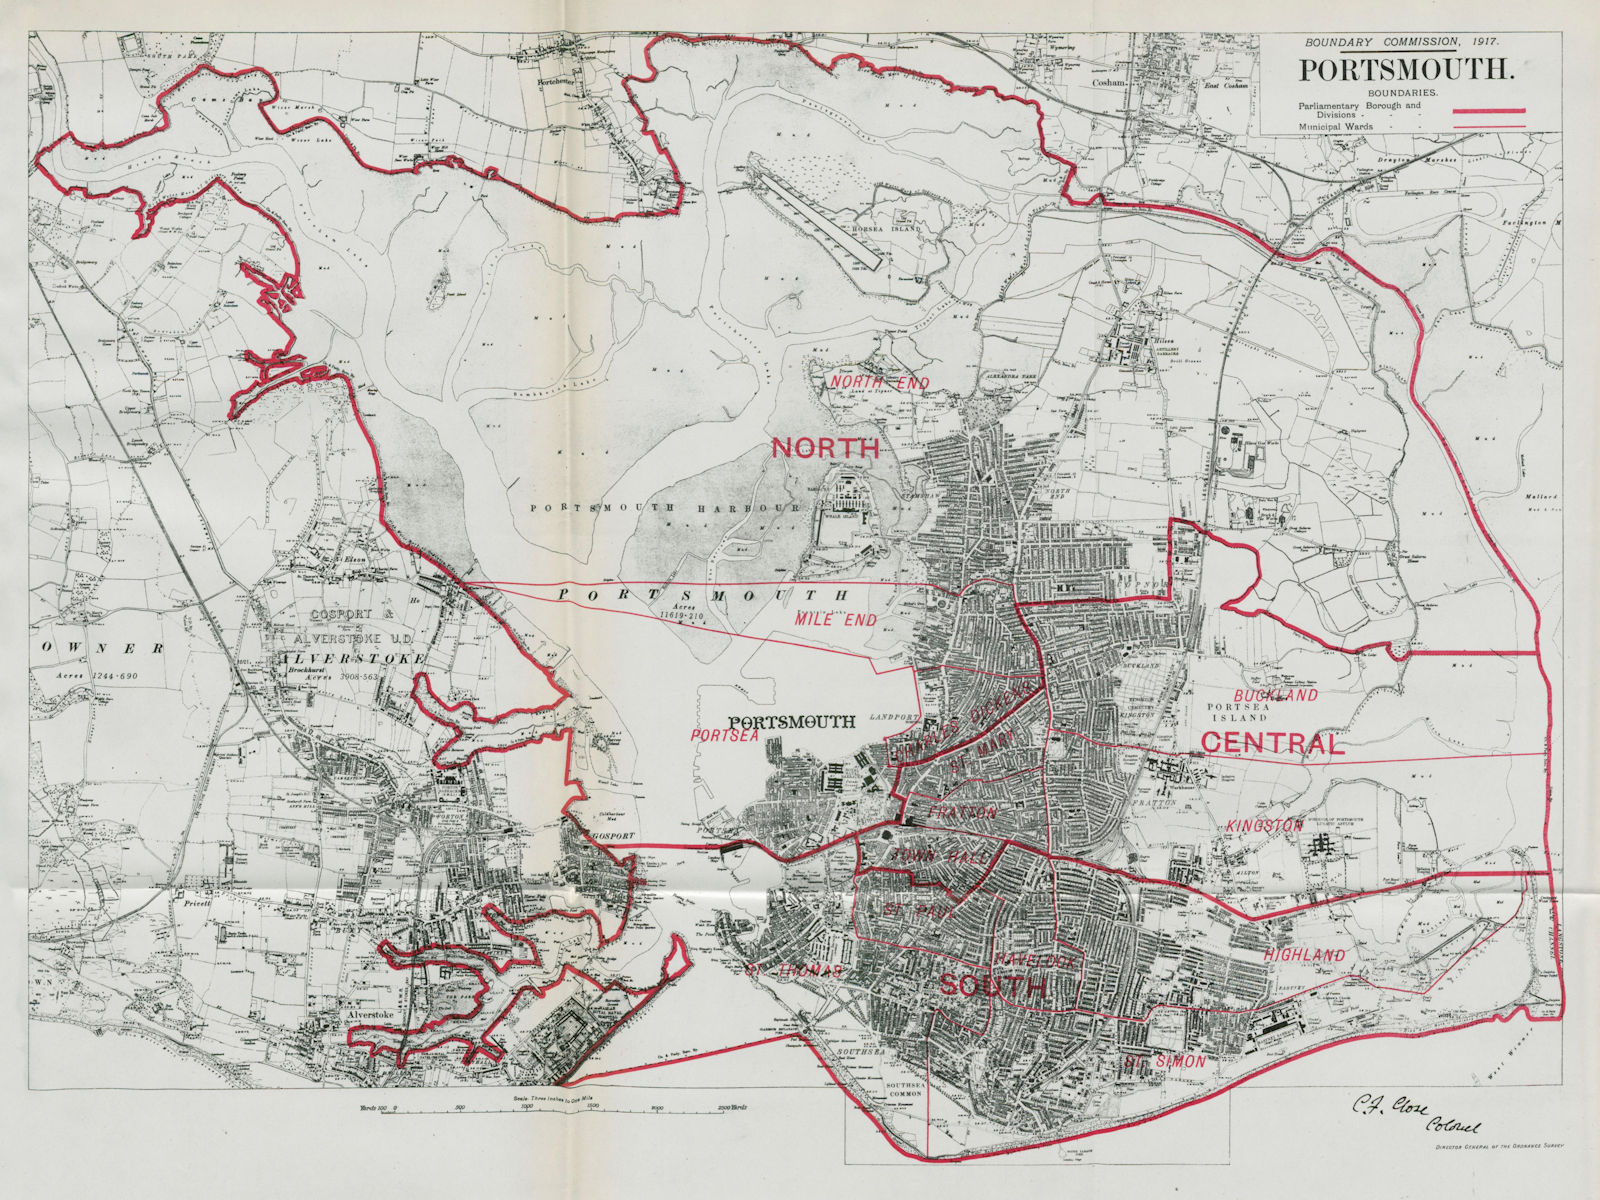 Portsmouth Parliamentary Borough. Gosport. BOUNDARY COMMISSION. Close 1917 map